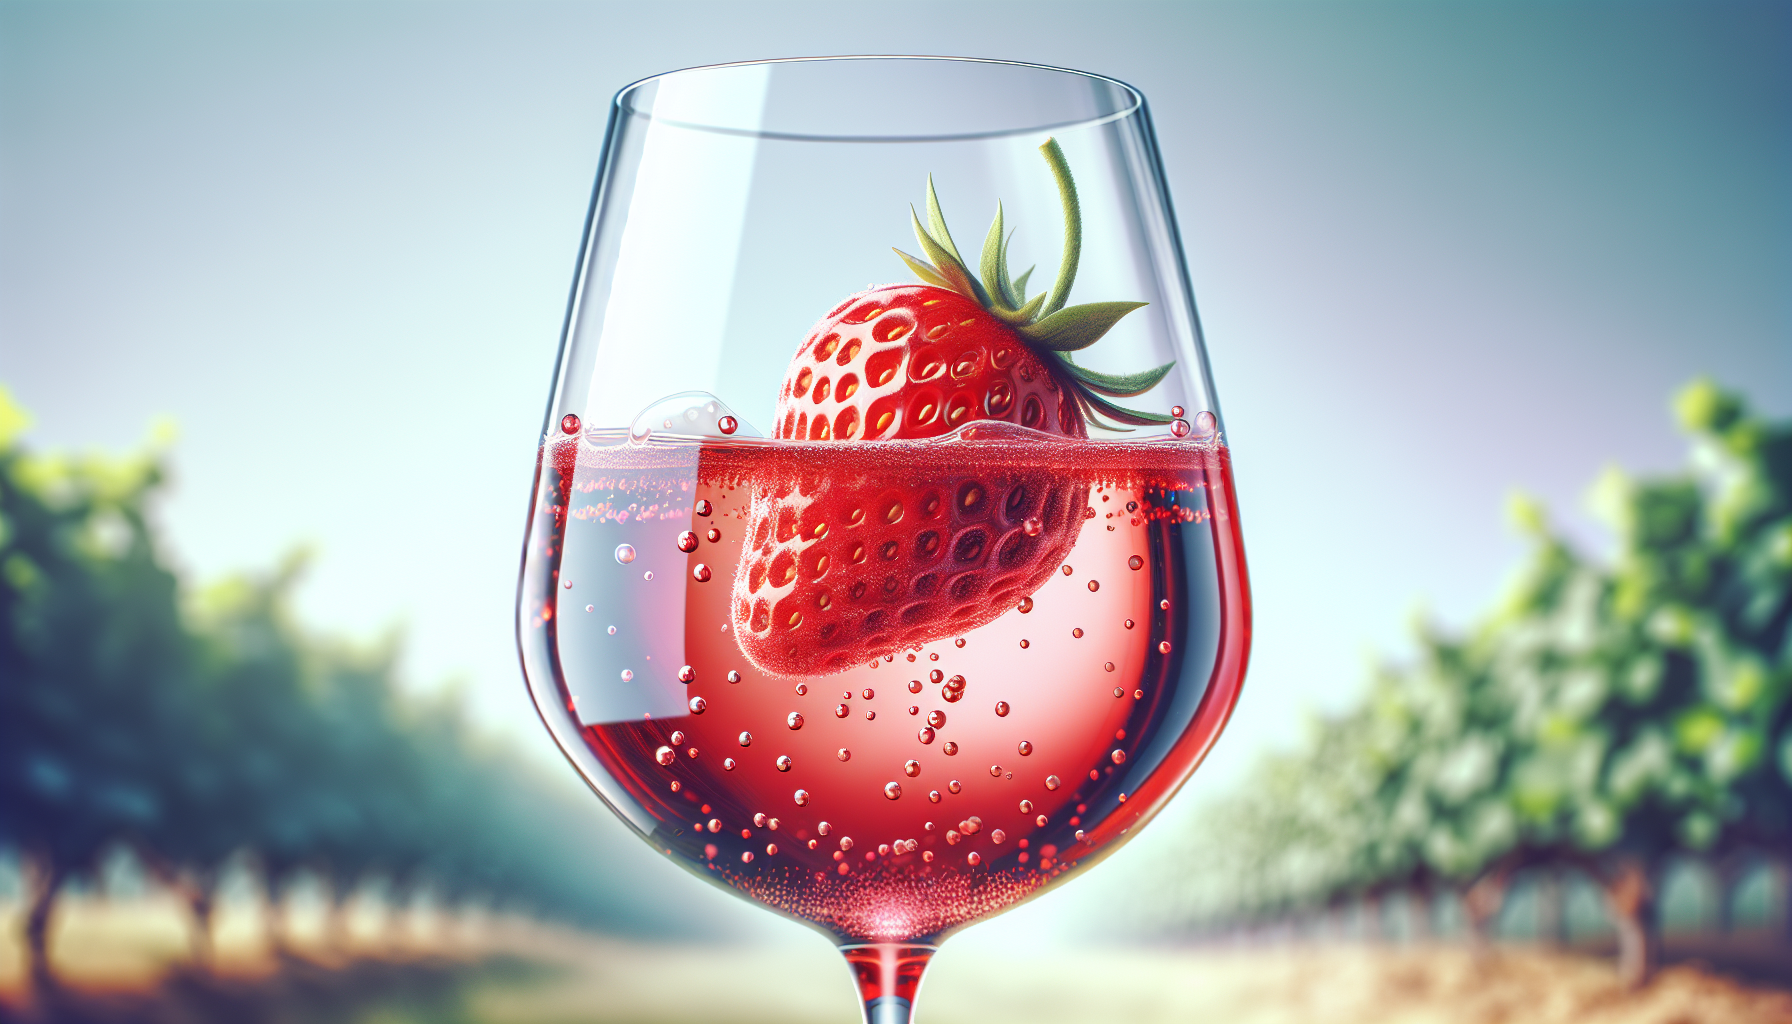 Artistic representation of strawberry wine